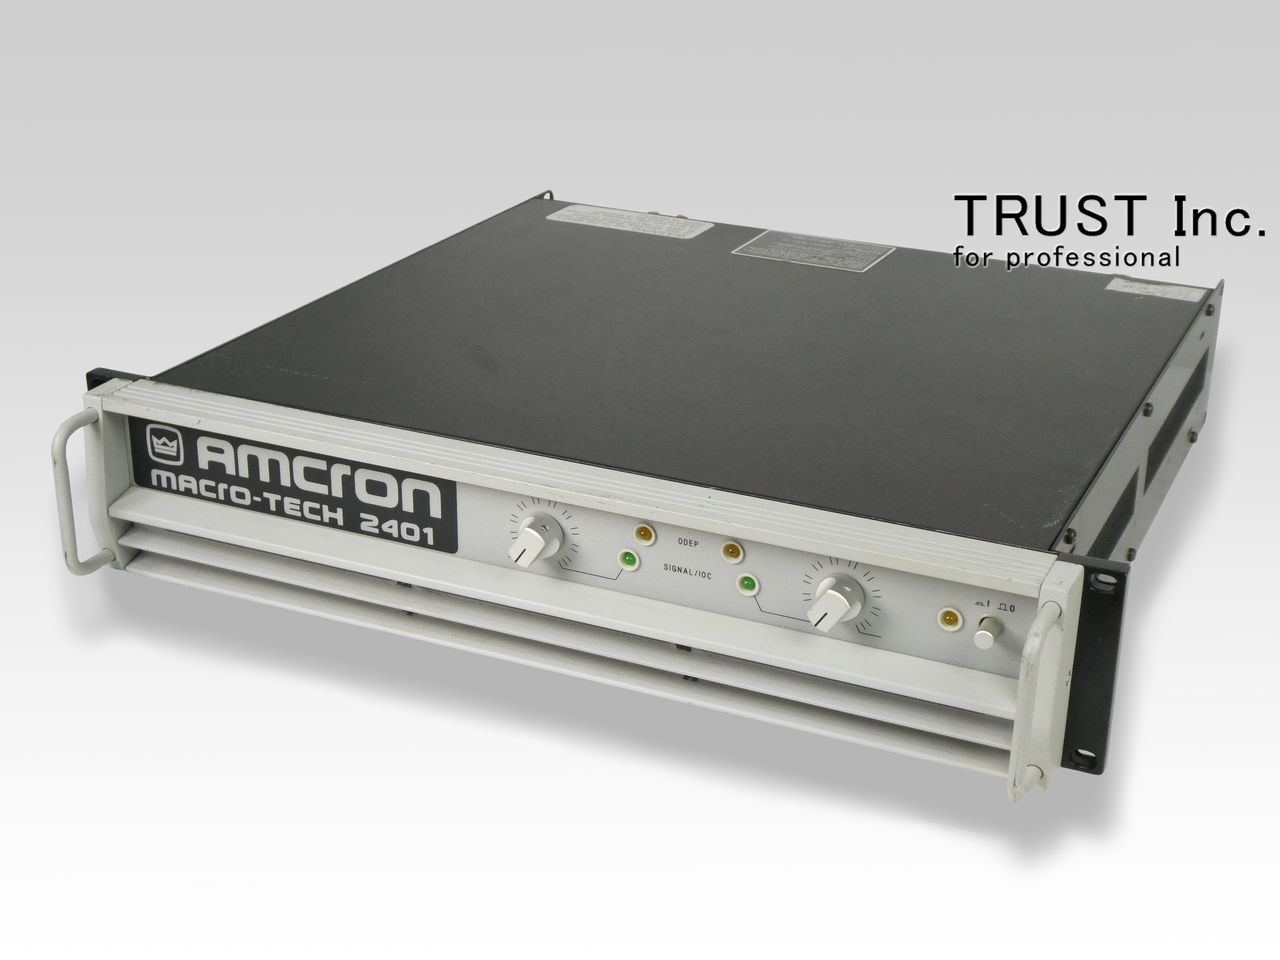 MACRO-TECH 2401 / Power Amplifier【中古放送用・業務用 映像機器